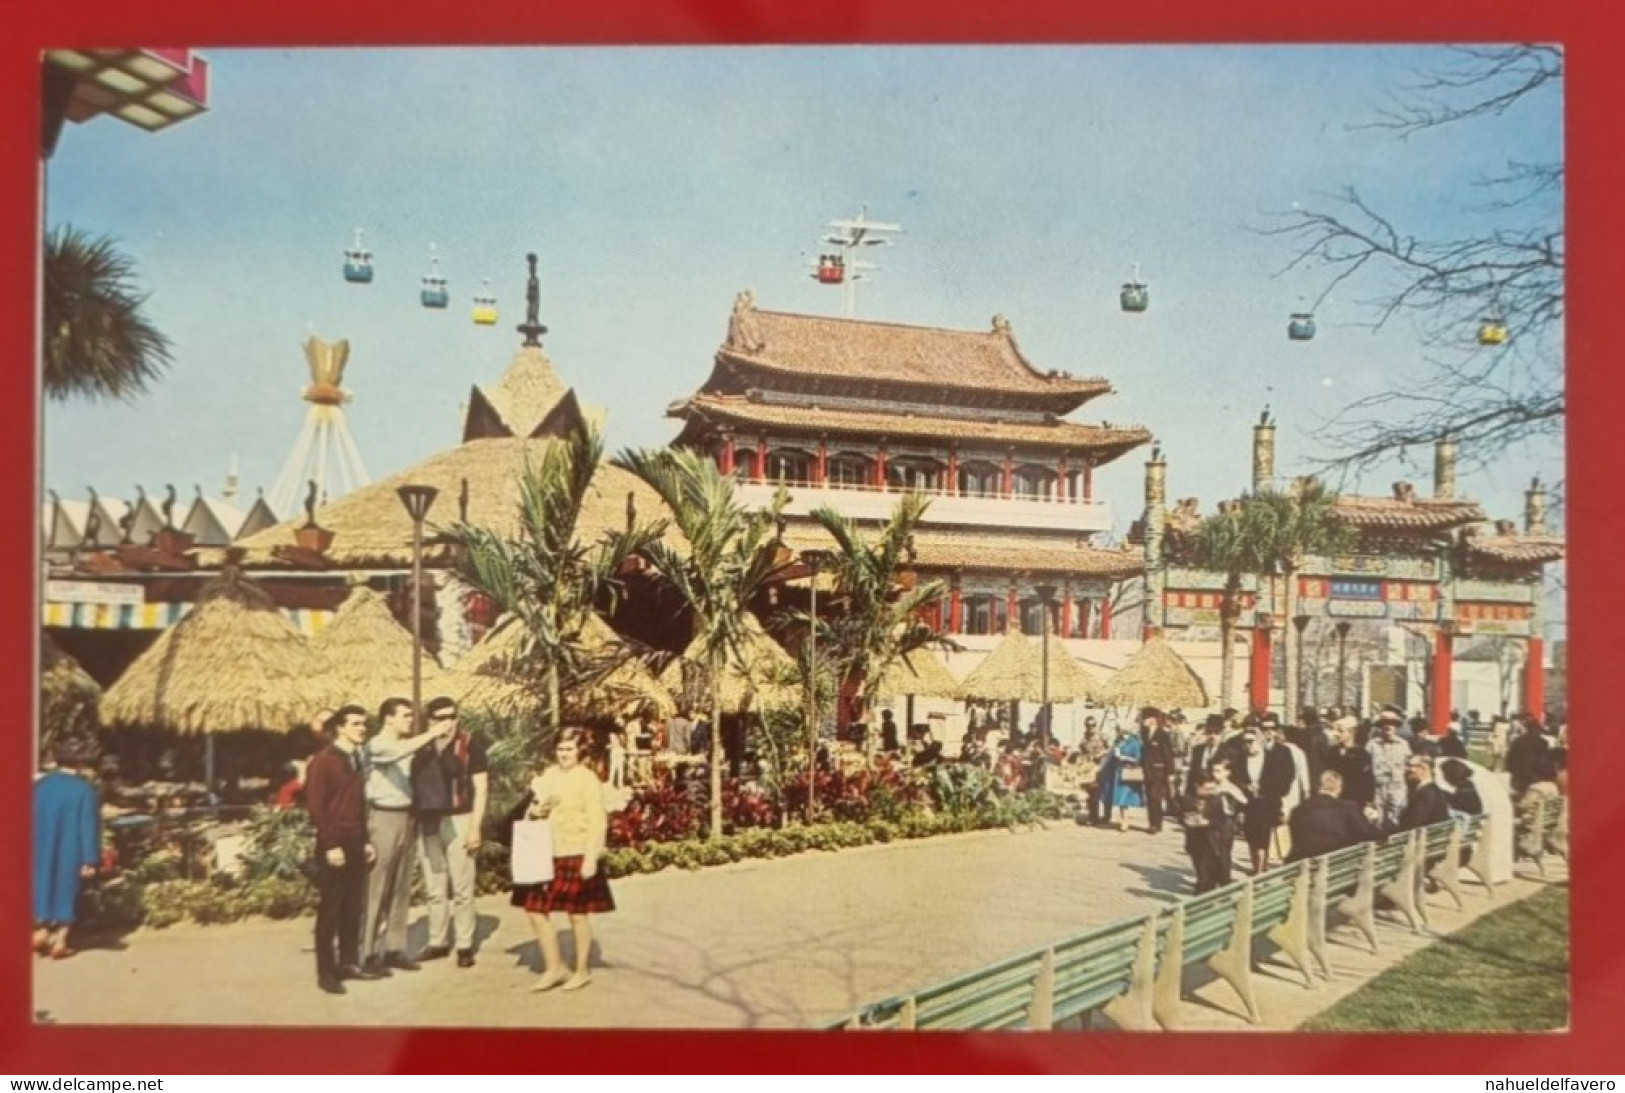 Uncirculated Postcard - USA - NY, NEW YORK WORLD'S FAIR 1964-65 - KENNEDY CIRCLE LOOKING NORTH - Ausstellungen